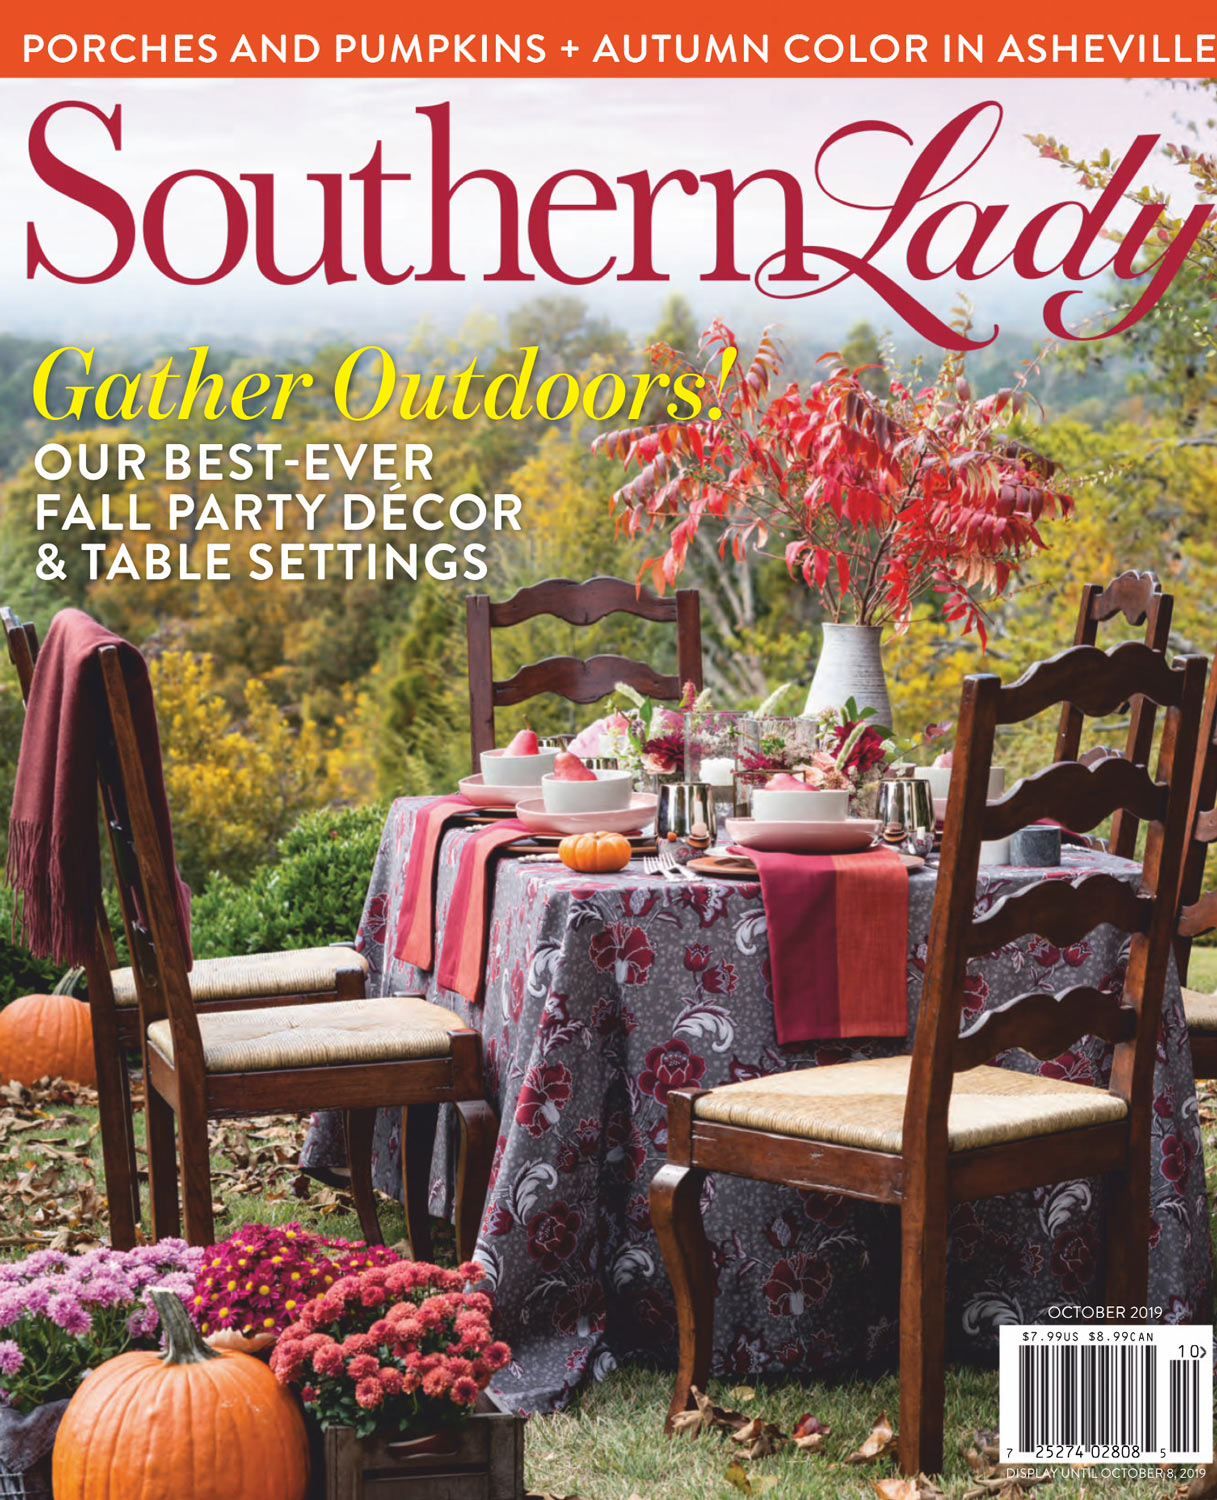 Southern Lady October 2019